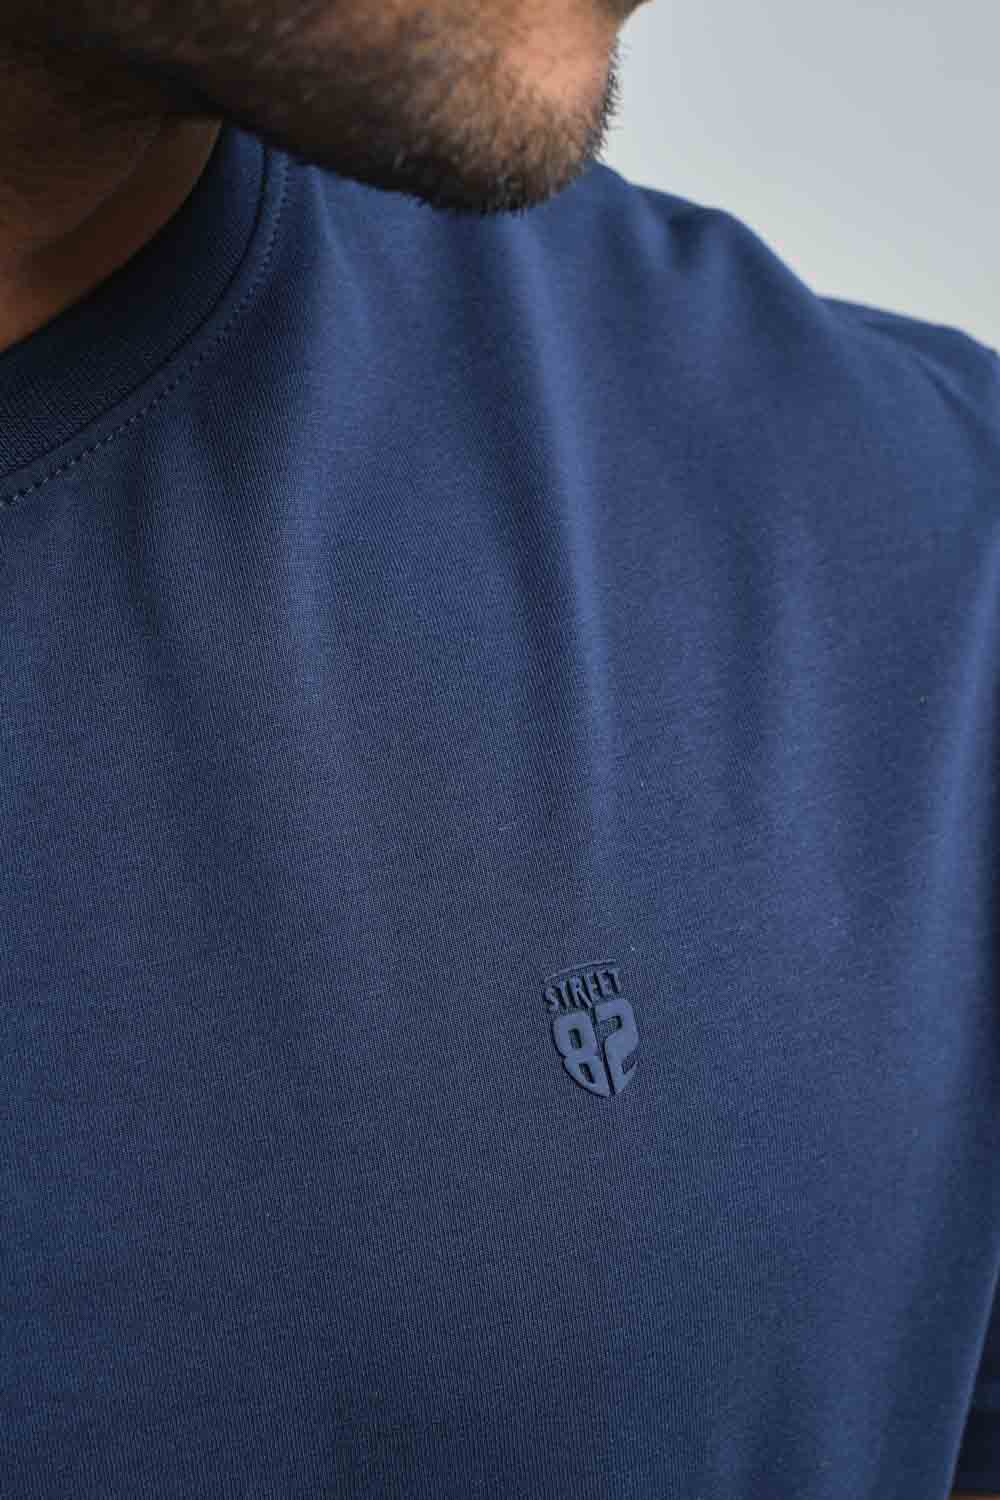 Plain Navy crew neck essential t-shirt